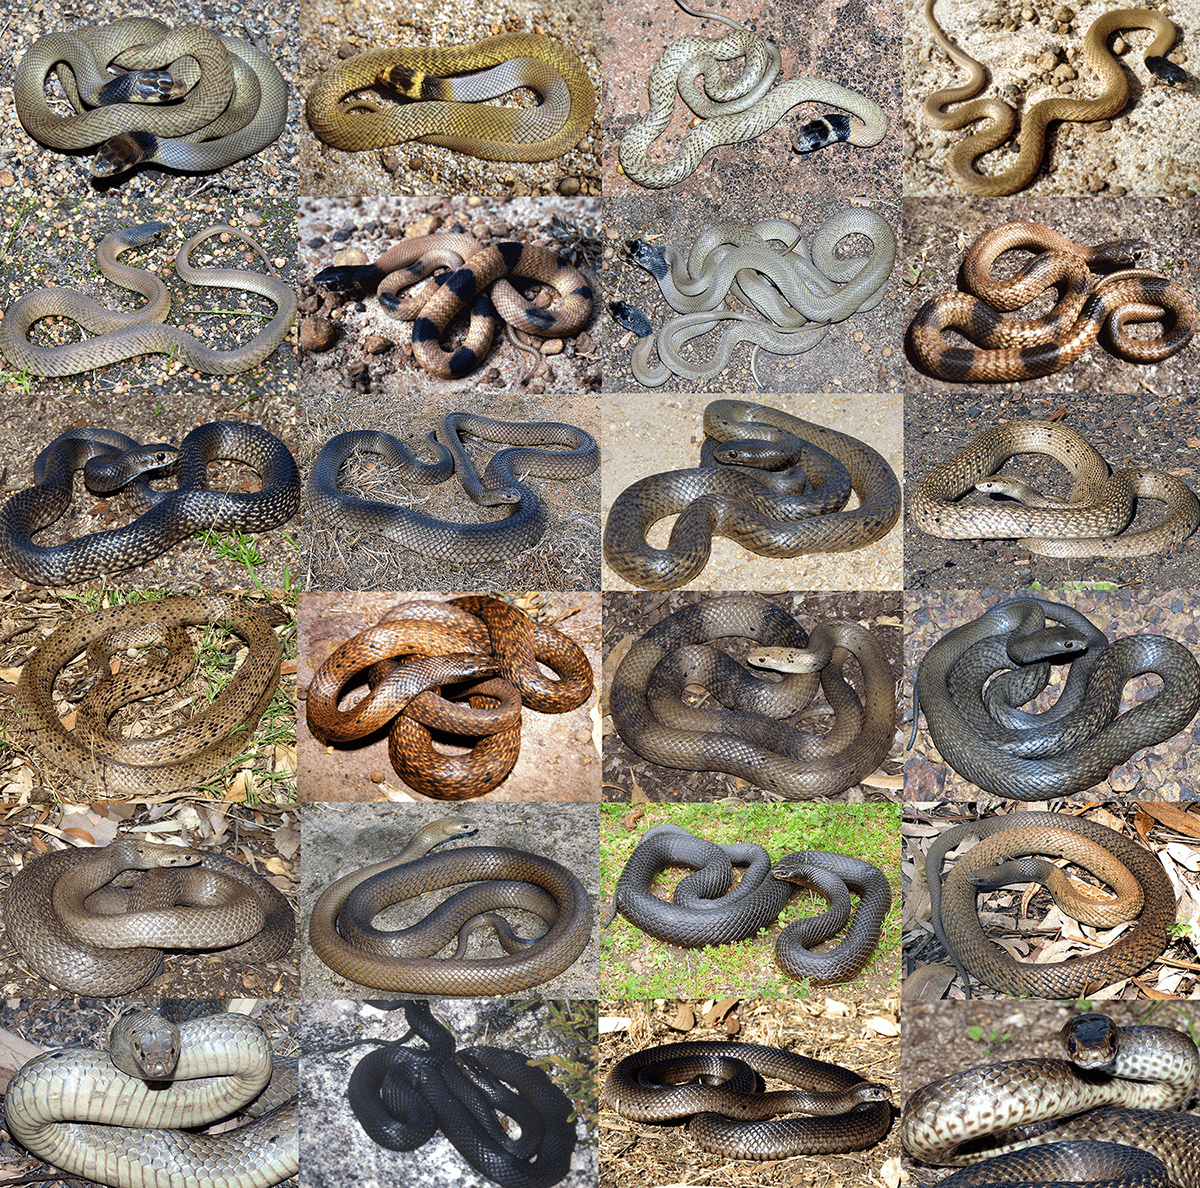 Victorian Snake Identification Chart